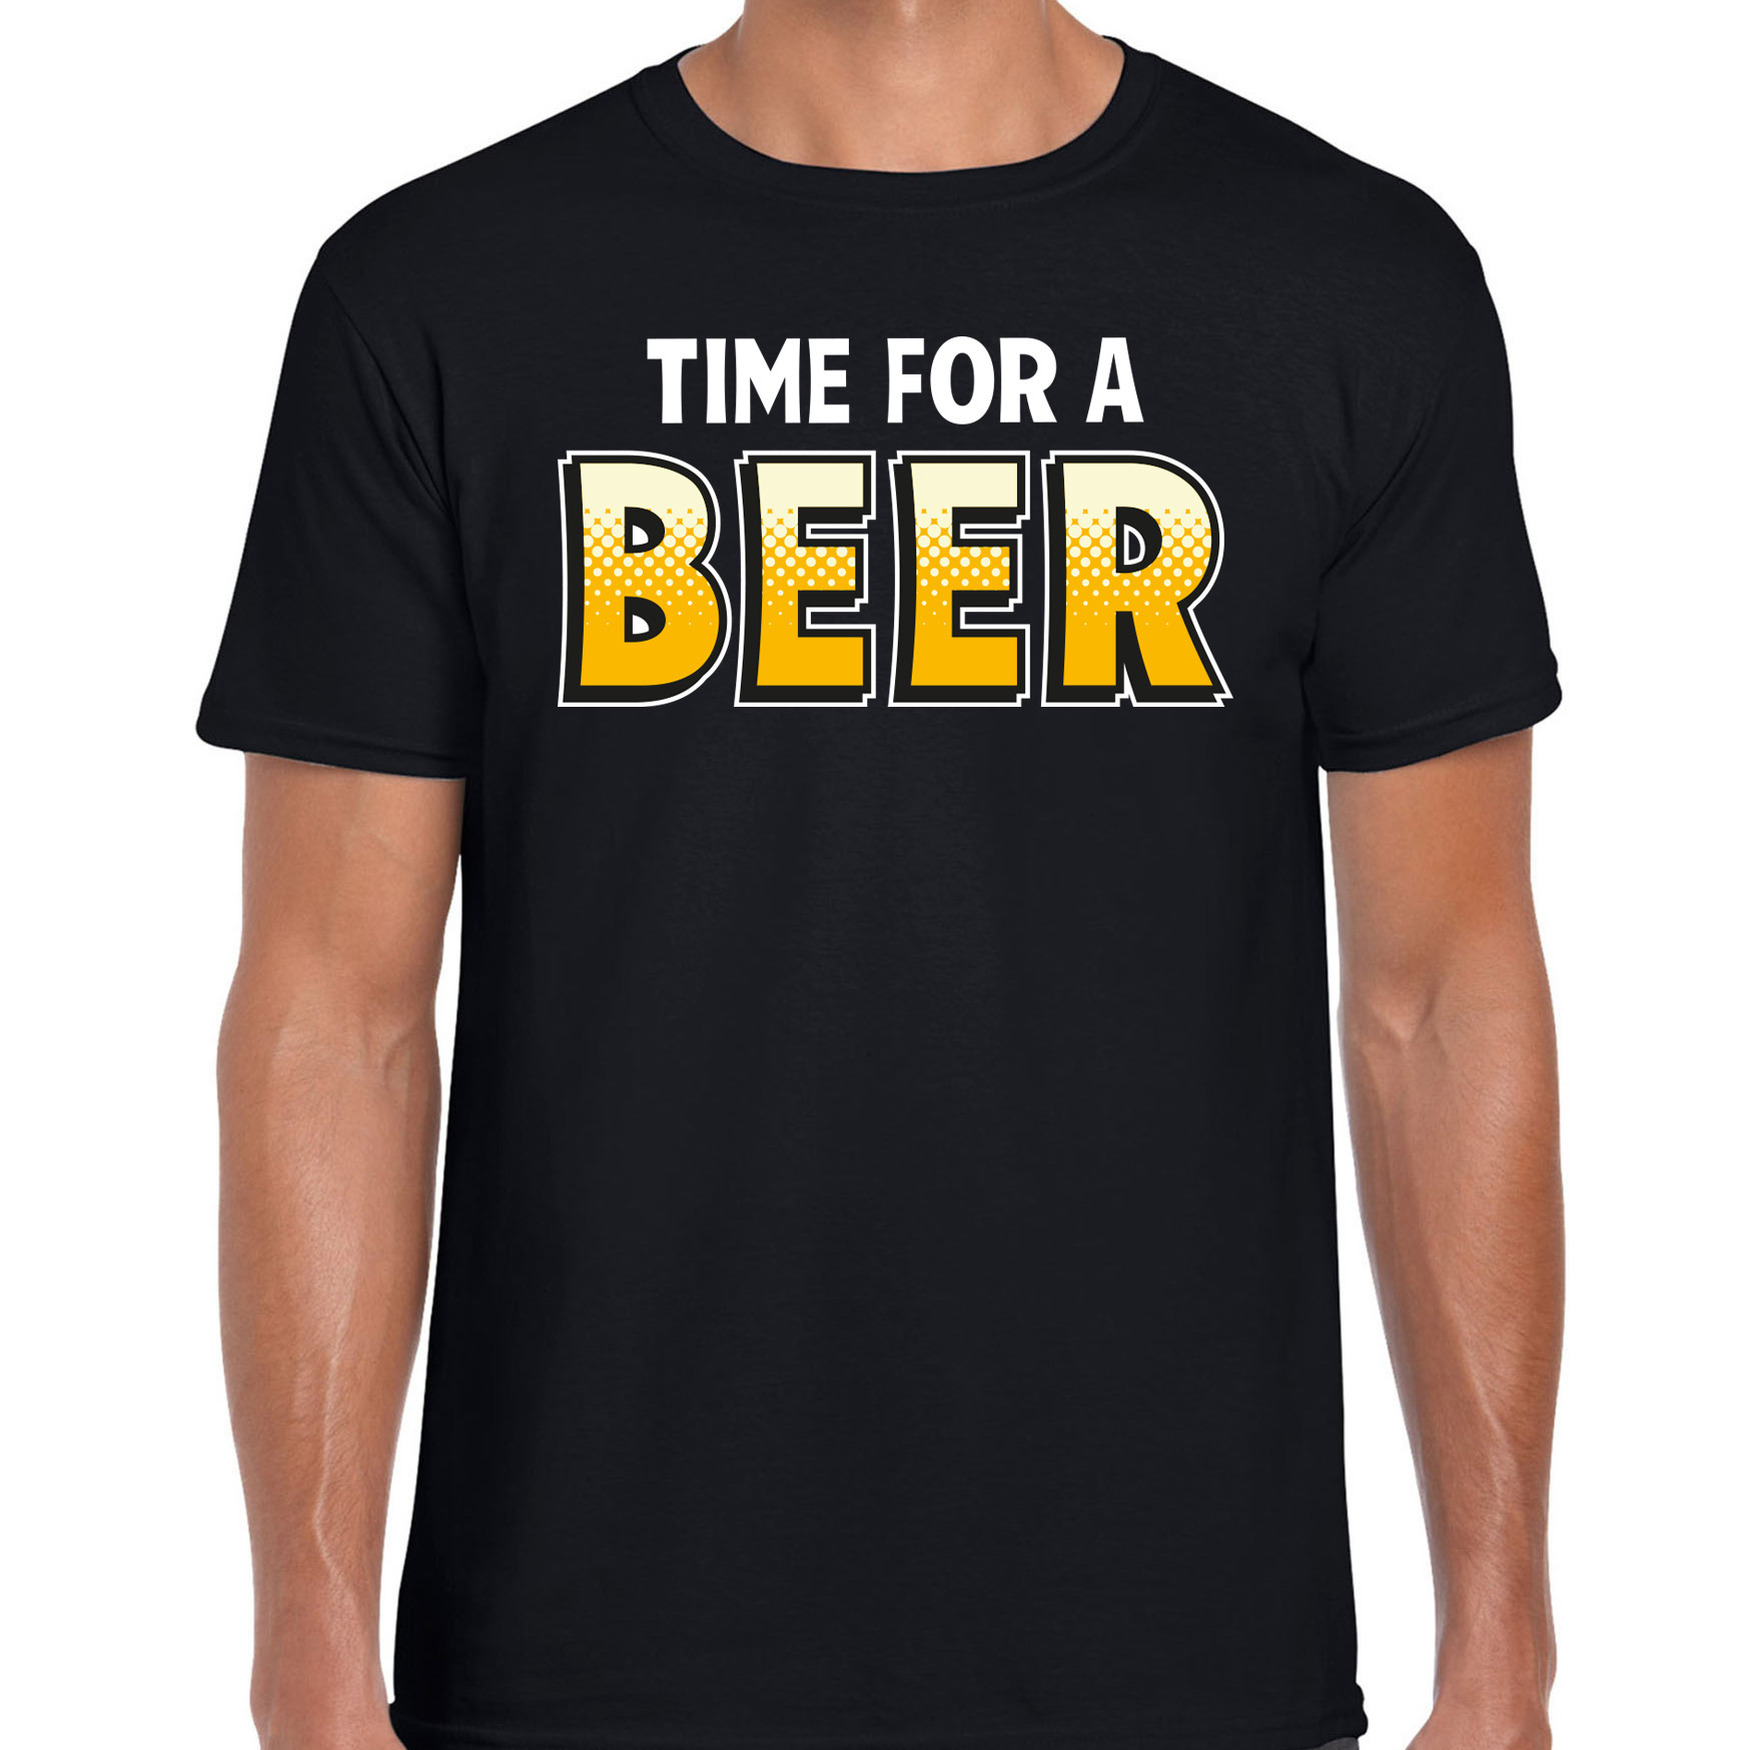 Time for a beer drank fun t-shirt zwart voor heren - bier - drink shirt kleding - drank thema